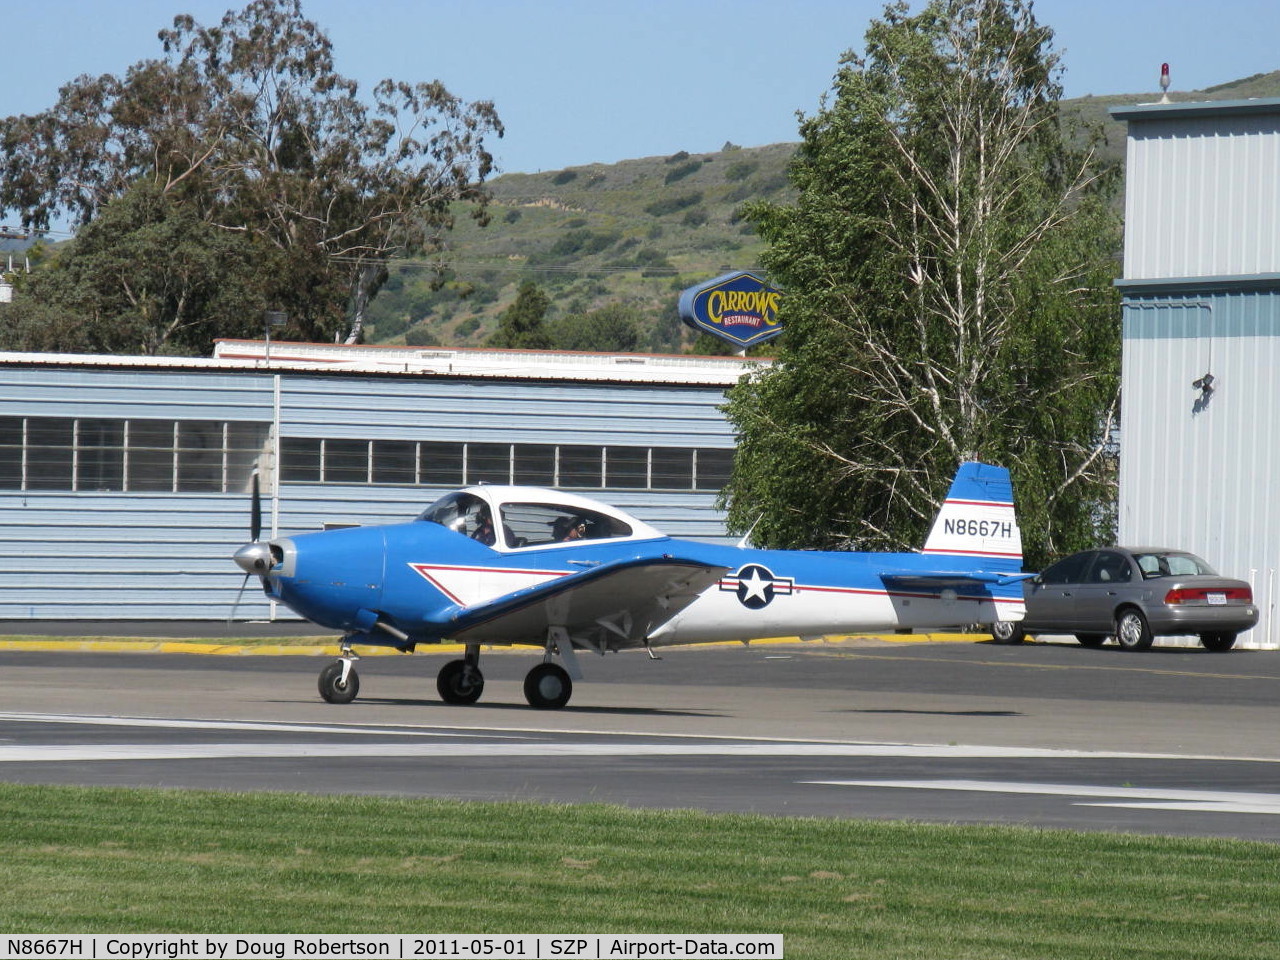 N8667H, 1947 North American Navion C/N NAV-4-667, 1947 North American NAVION, Continental IO-520 285 Hp upgrade, Young Eagles Flight, taking the active